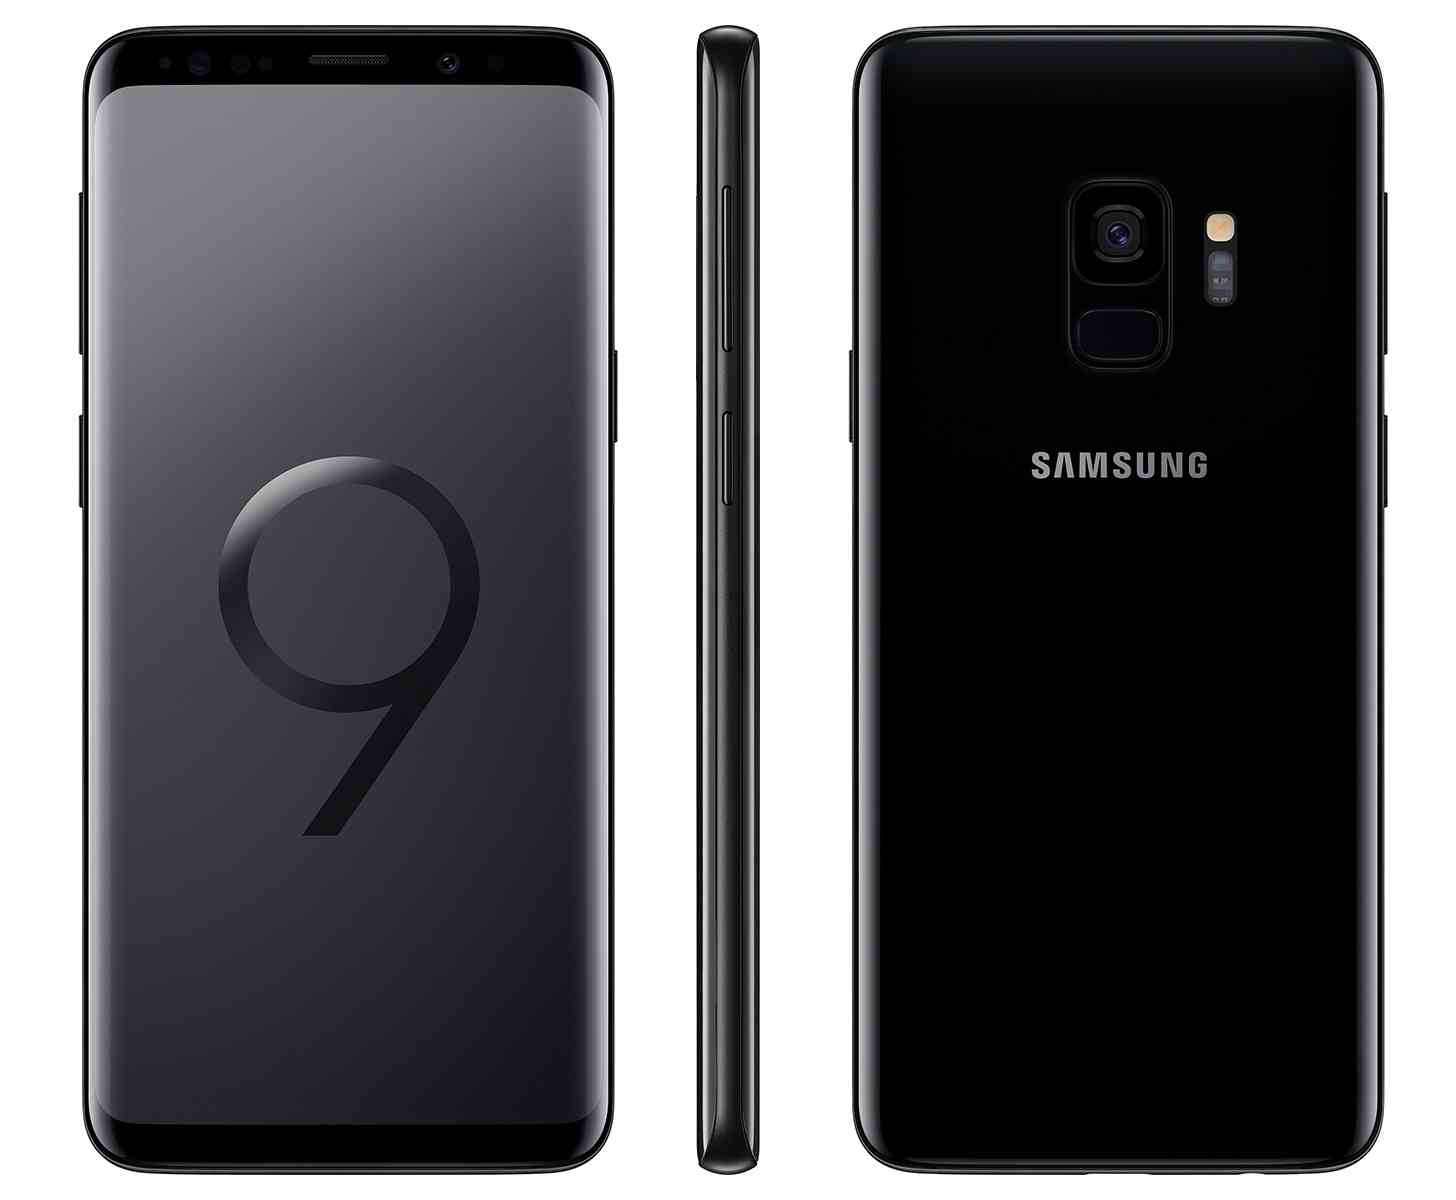 Samsung Galaxy S9 Midnight Black official